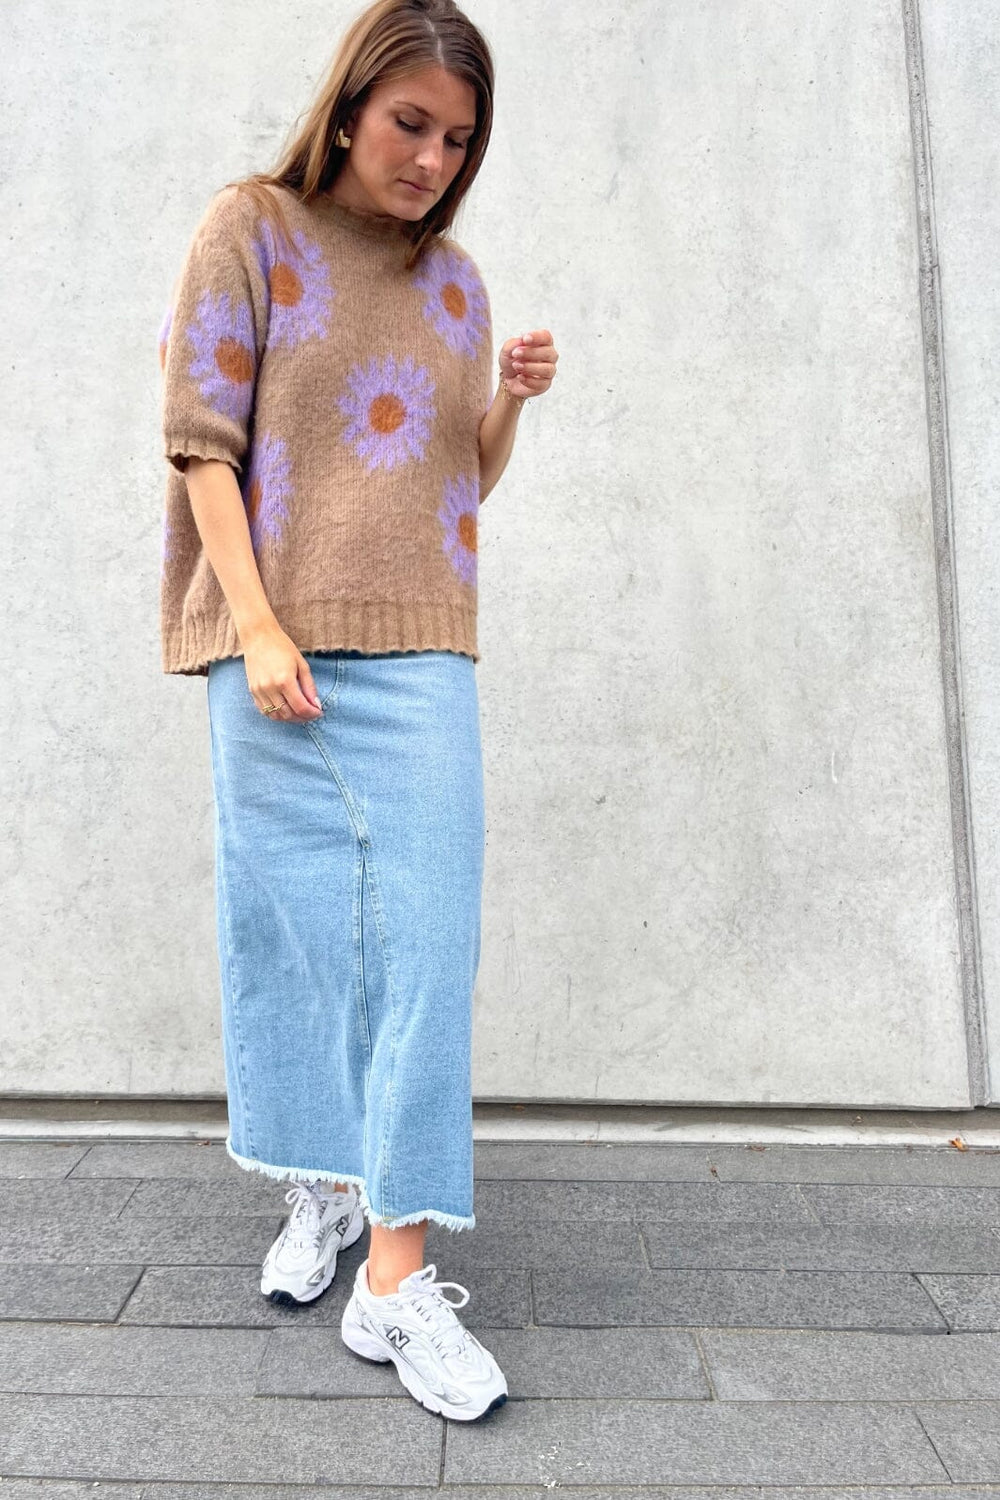 Noella - Raya Knit Sweater - 903 Sand/Lavender Flower Strikbluser 